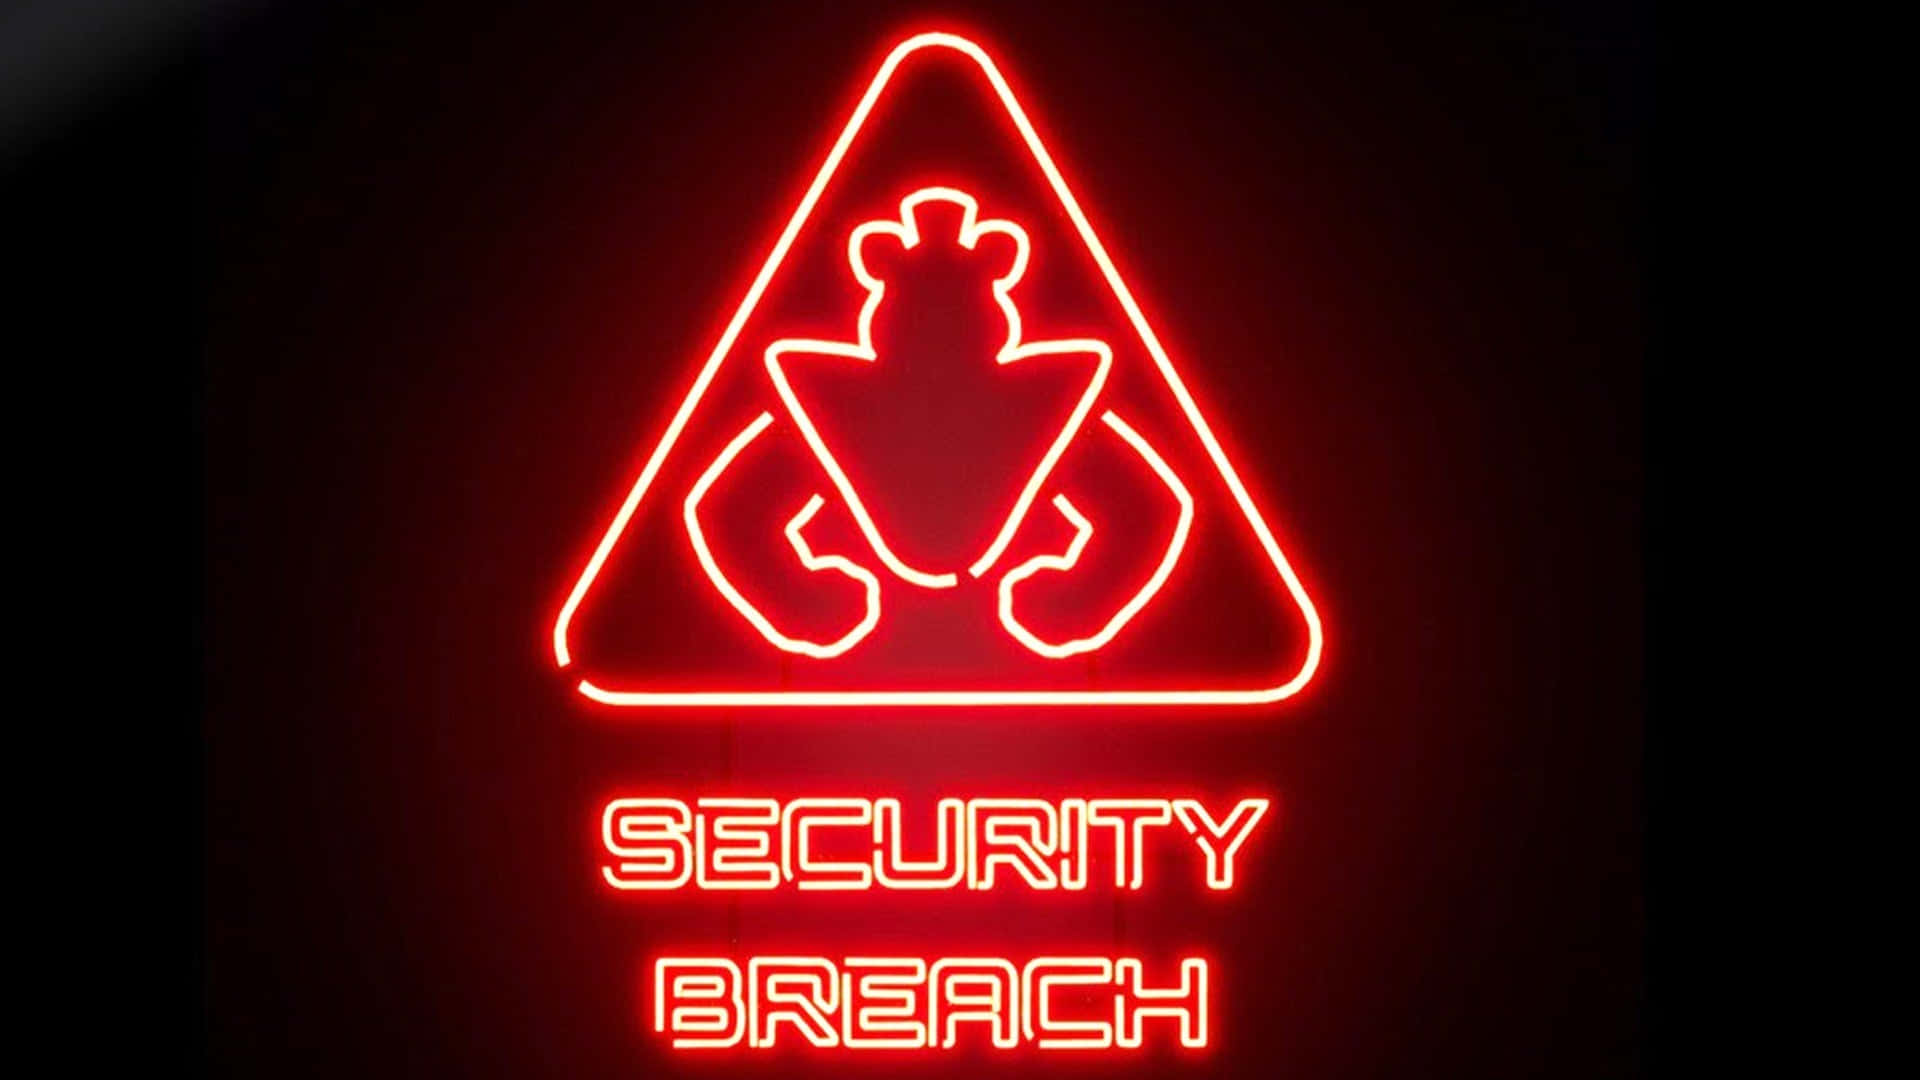 34 Five Nights At Freddys Security Breach Wallpapers  WallpaperSafari